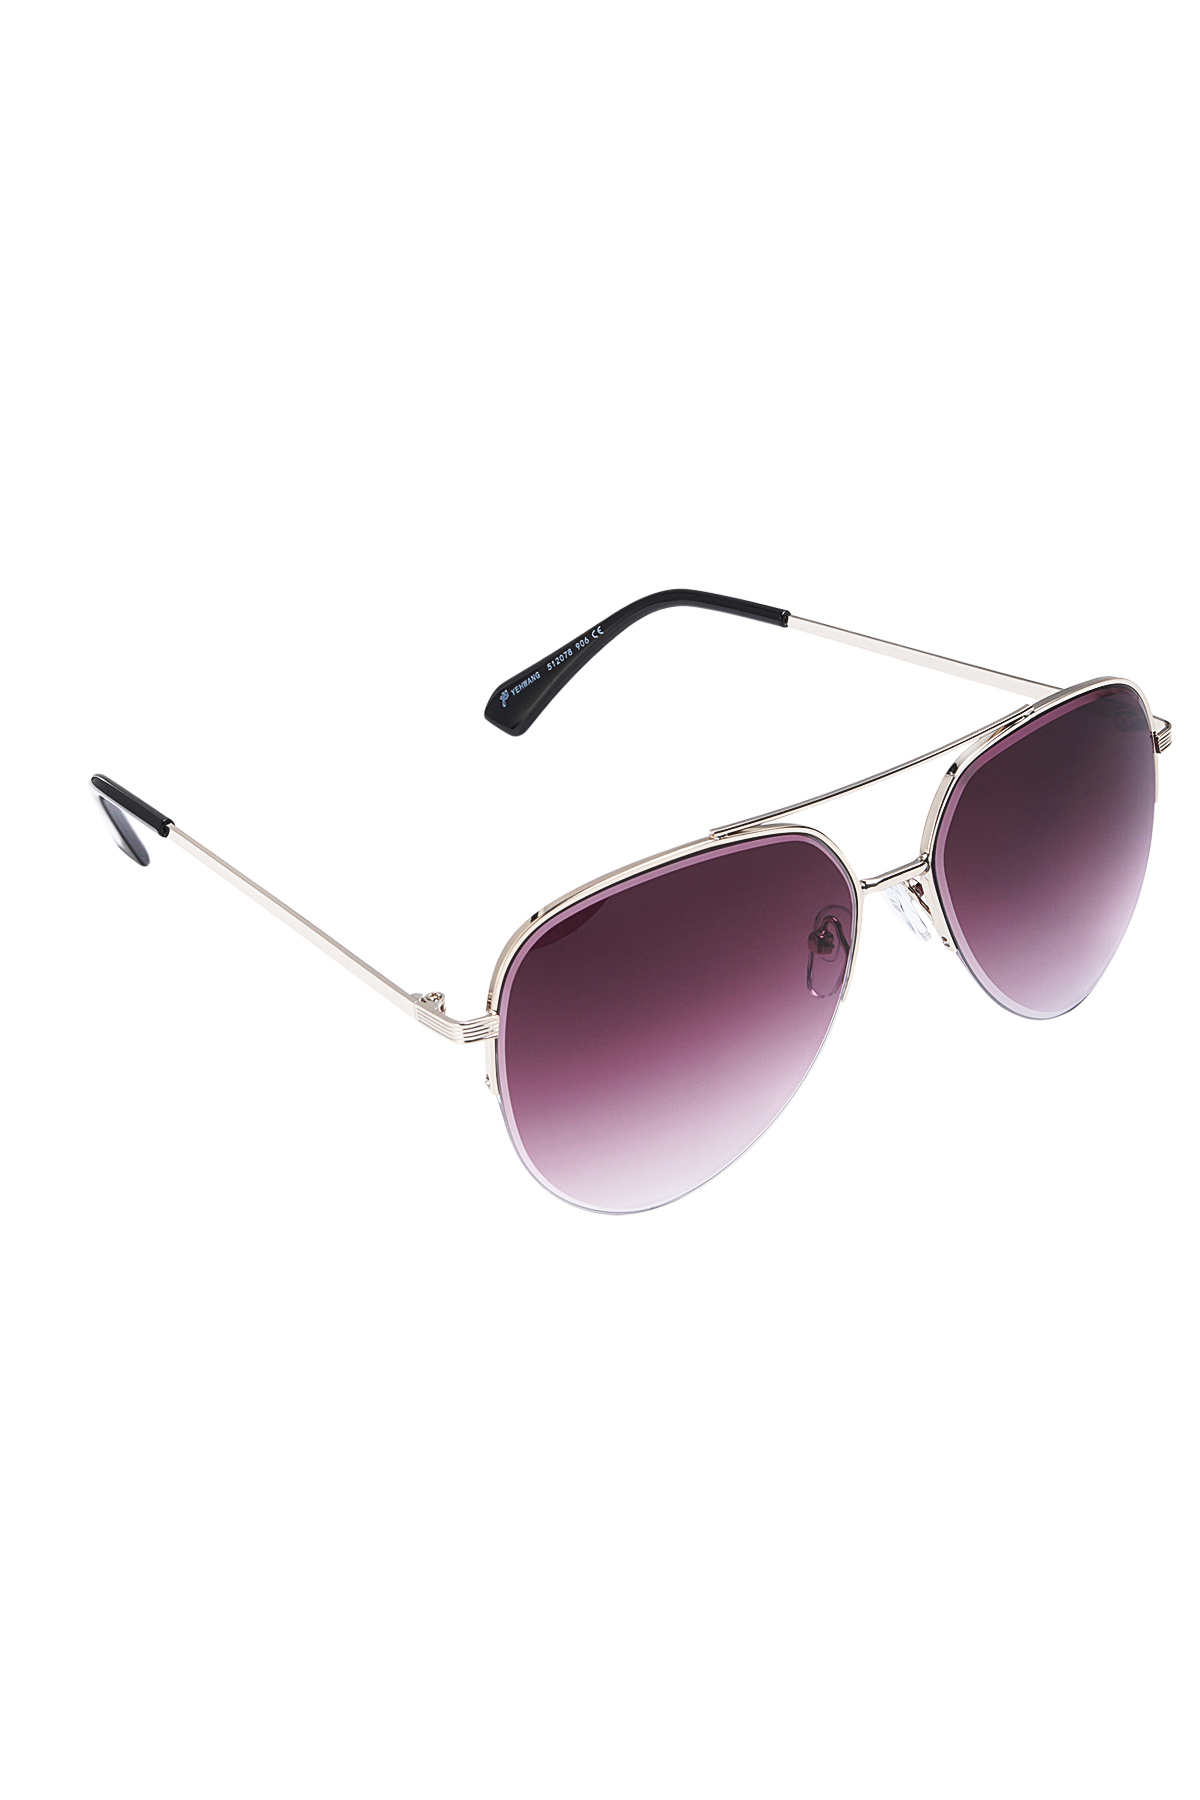 Aviator style sunglasses - purple h5 